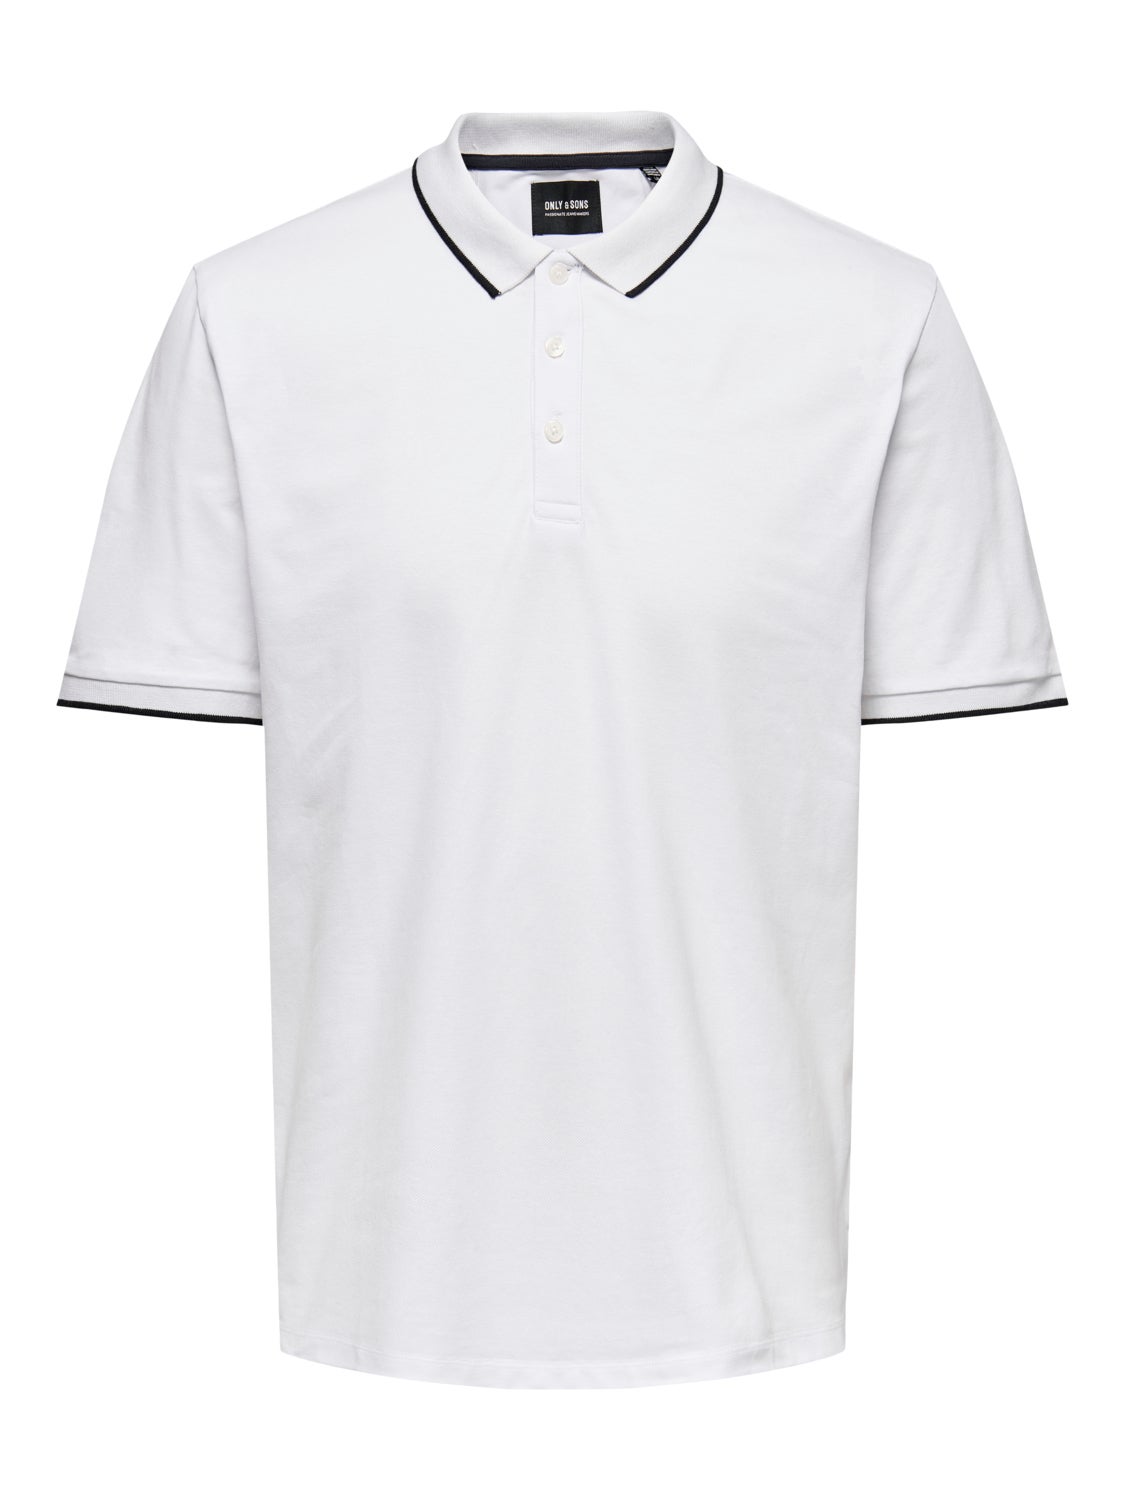 ONLY & SONS Poloshirt Schwarz L HERREN Hemden & T-Shirts Stricken Rabatt 62 % 